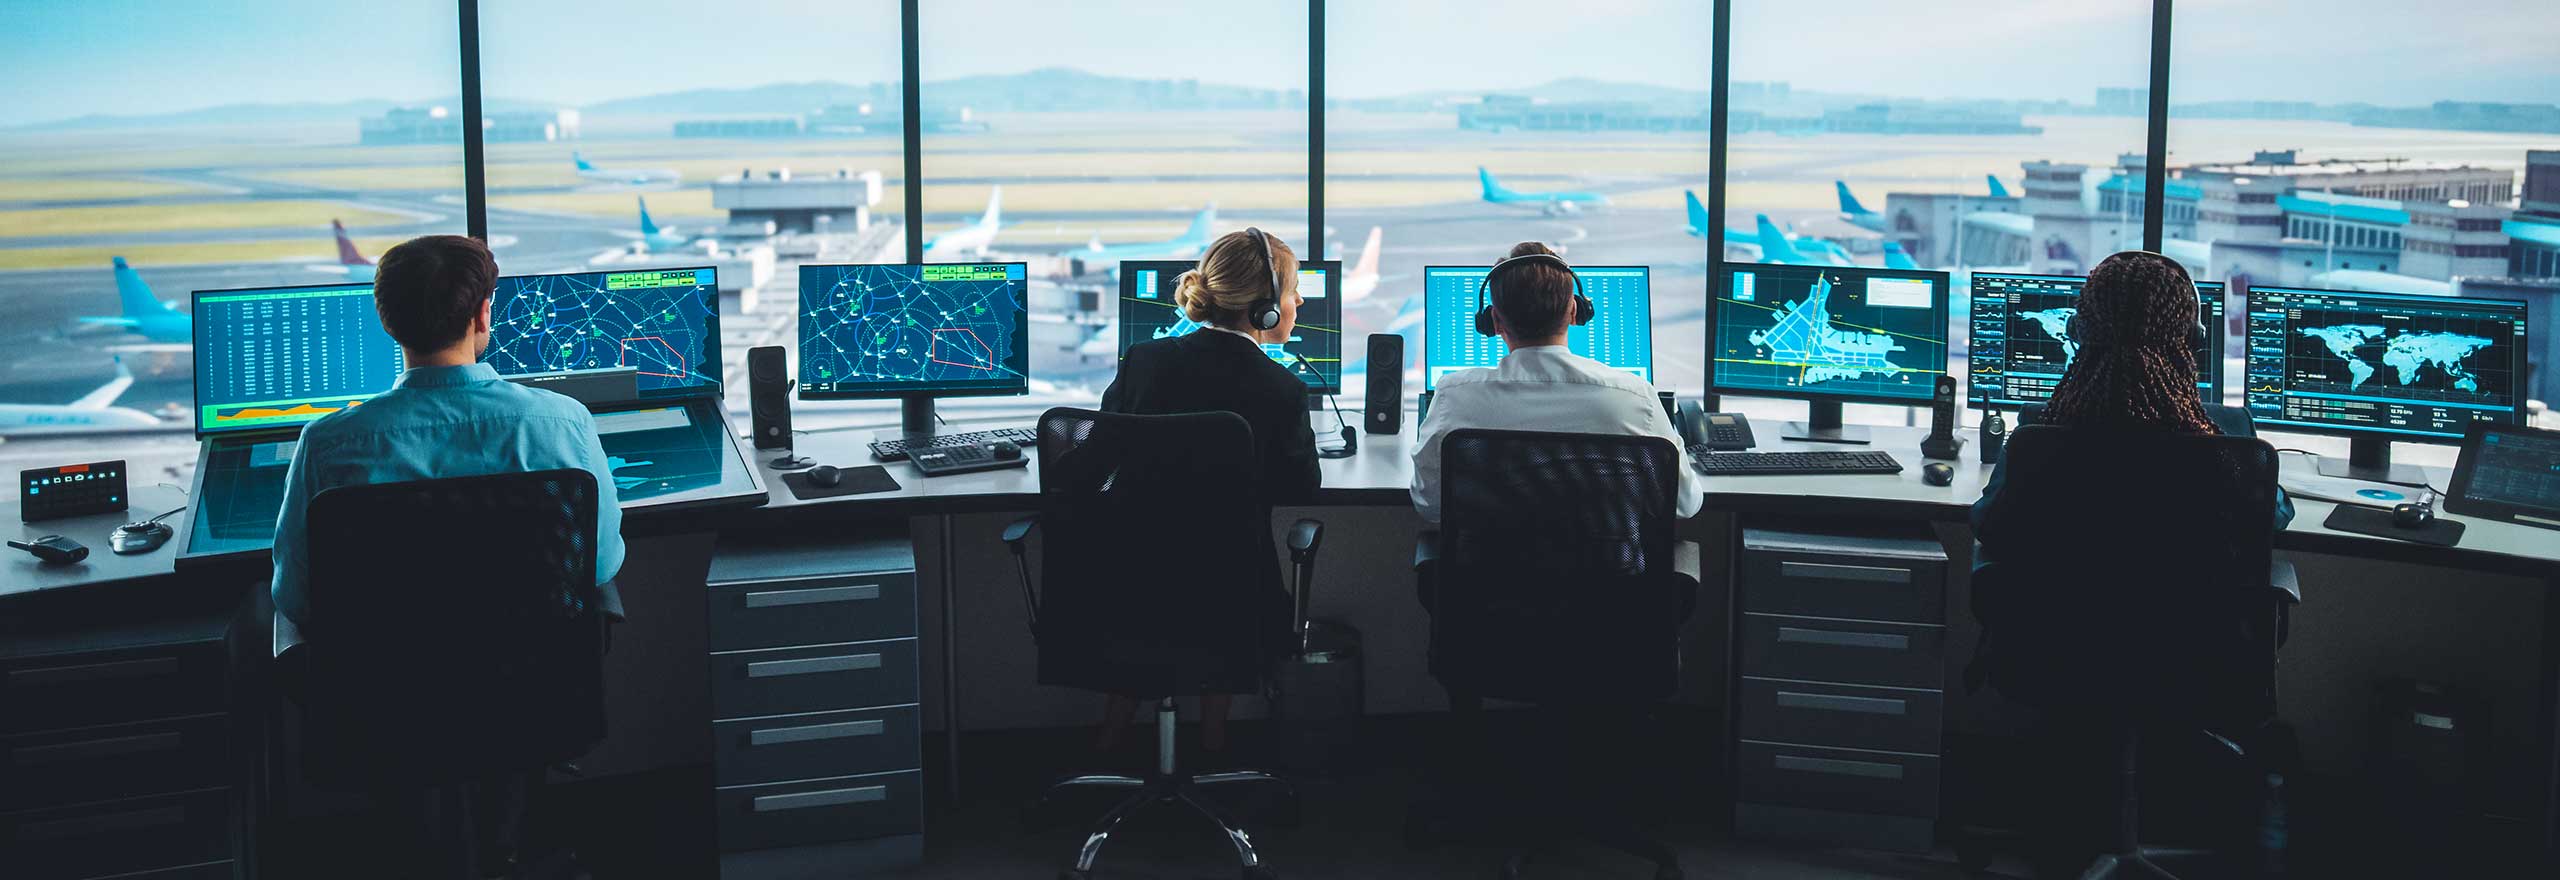 Air traffic controllers managing air traffic